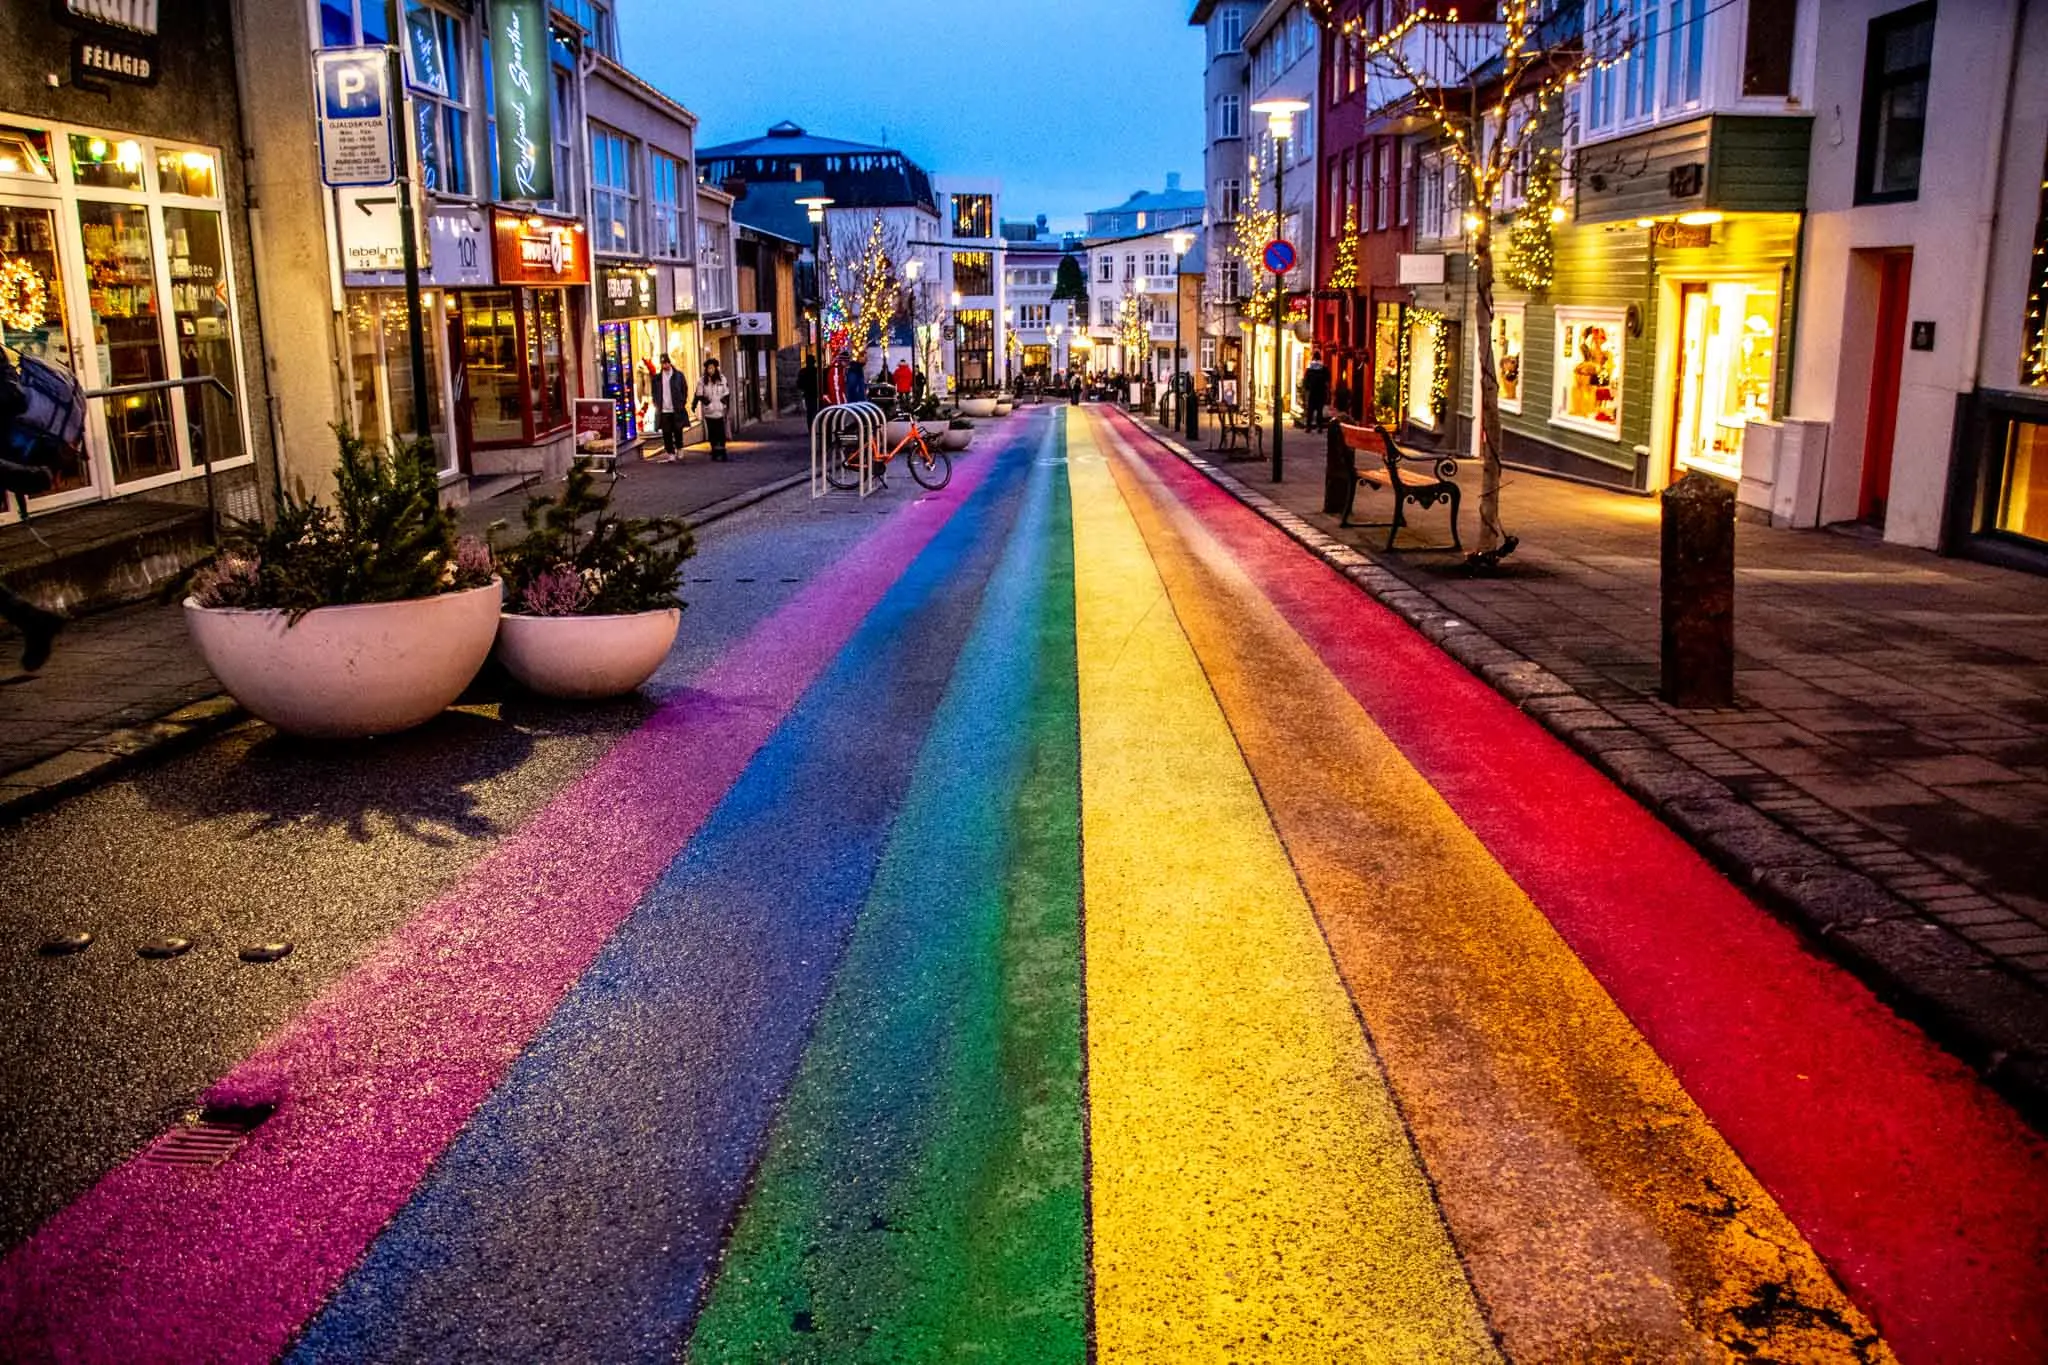 The rainbow pride flag painted on the street in Reykjavik